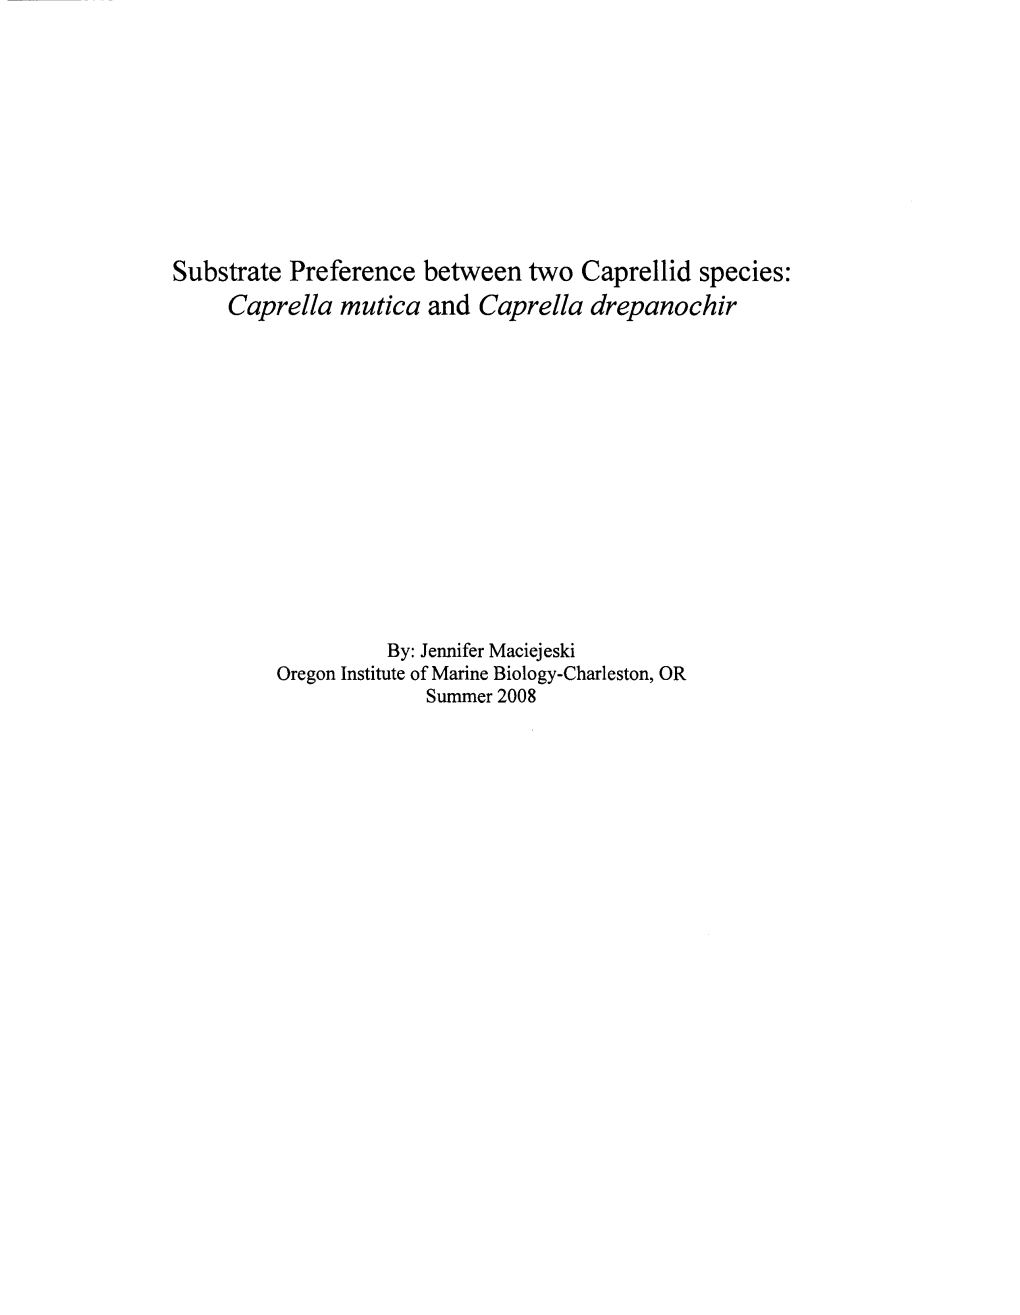 Substrate Preference Between Two Caprellid Species: Caprella Mutica and Caprella Drepanochir